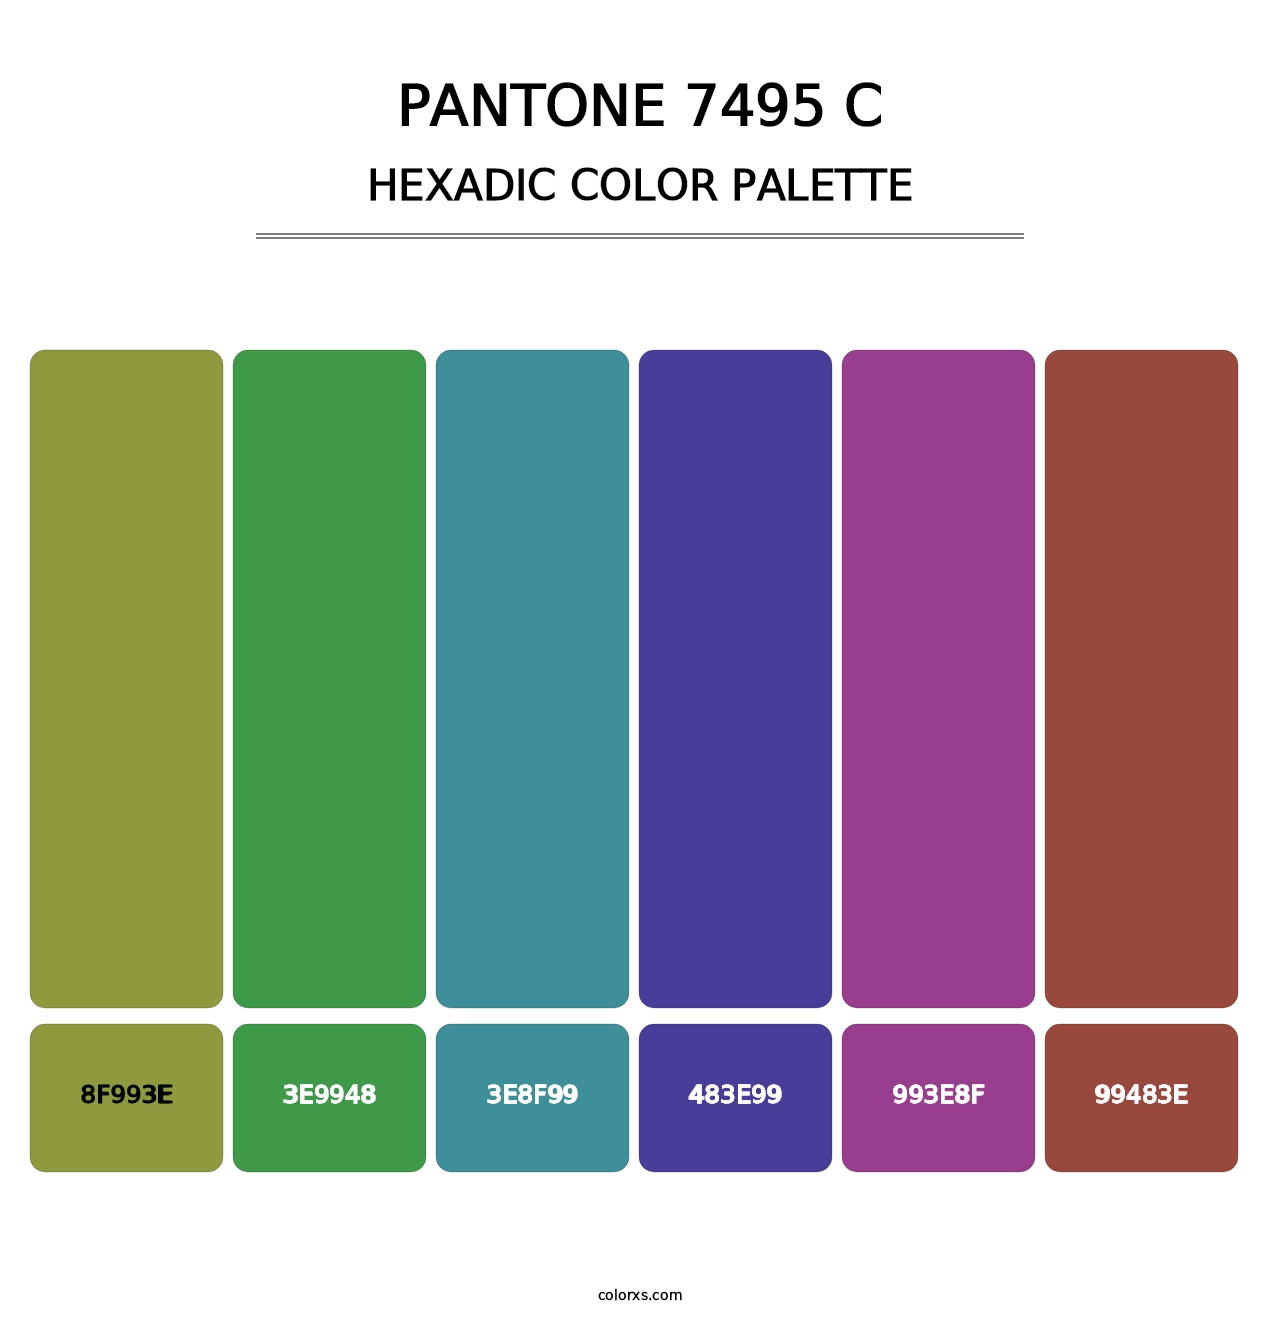 PANTONE 7495 C - Hexadic Color Palette